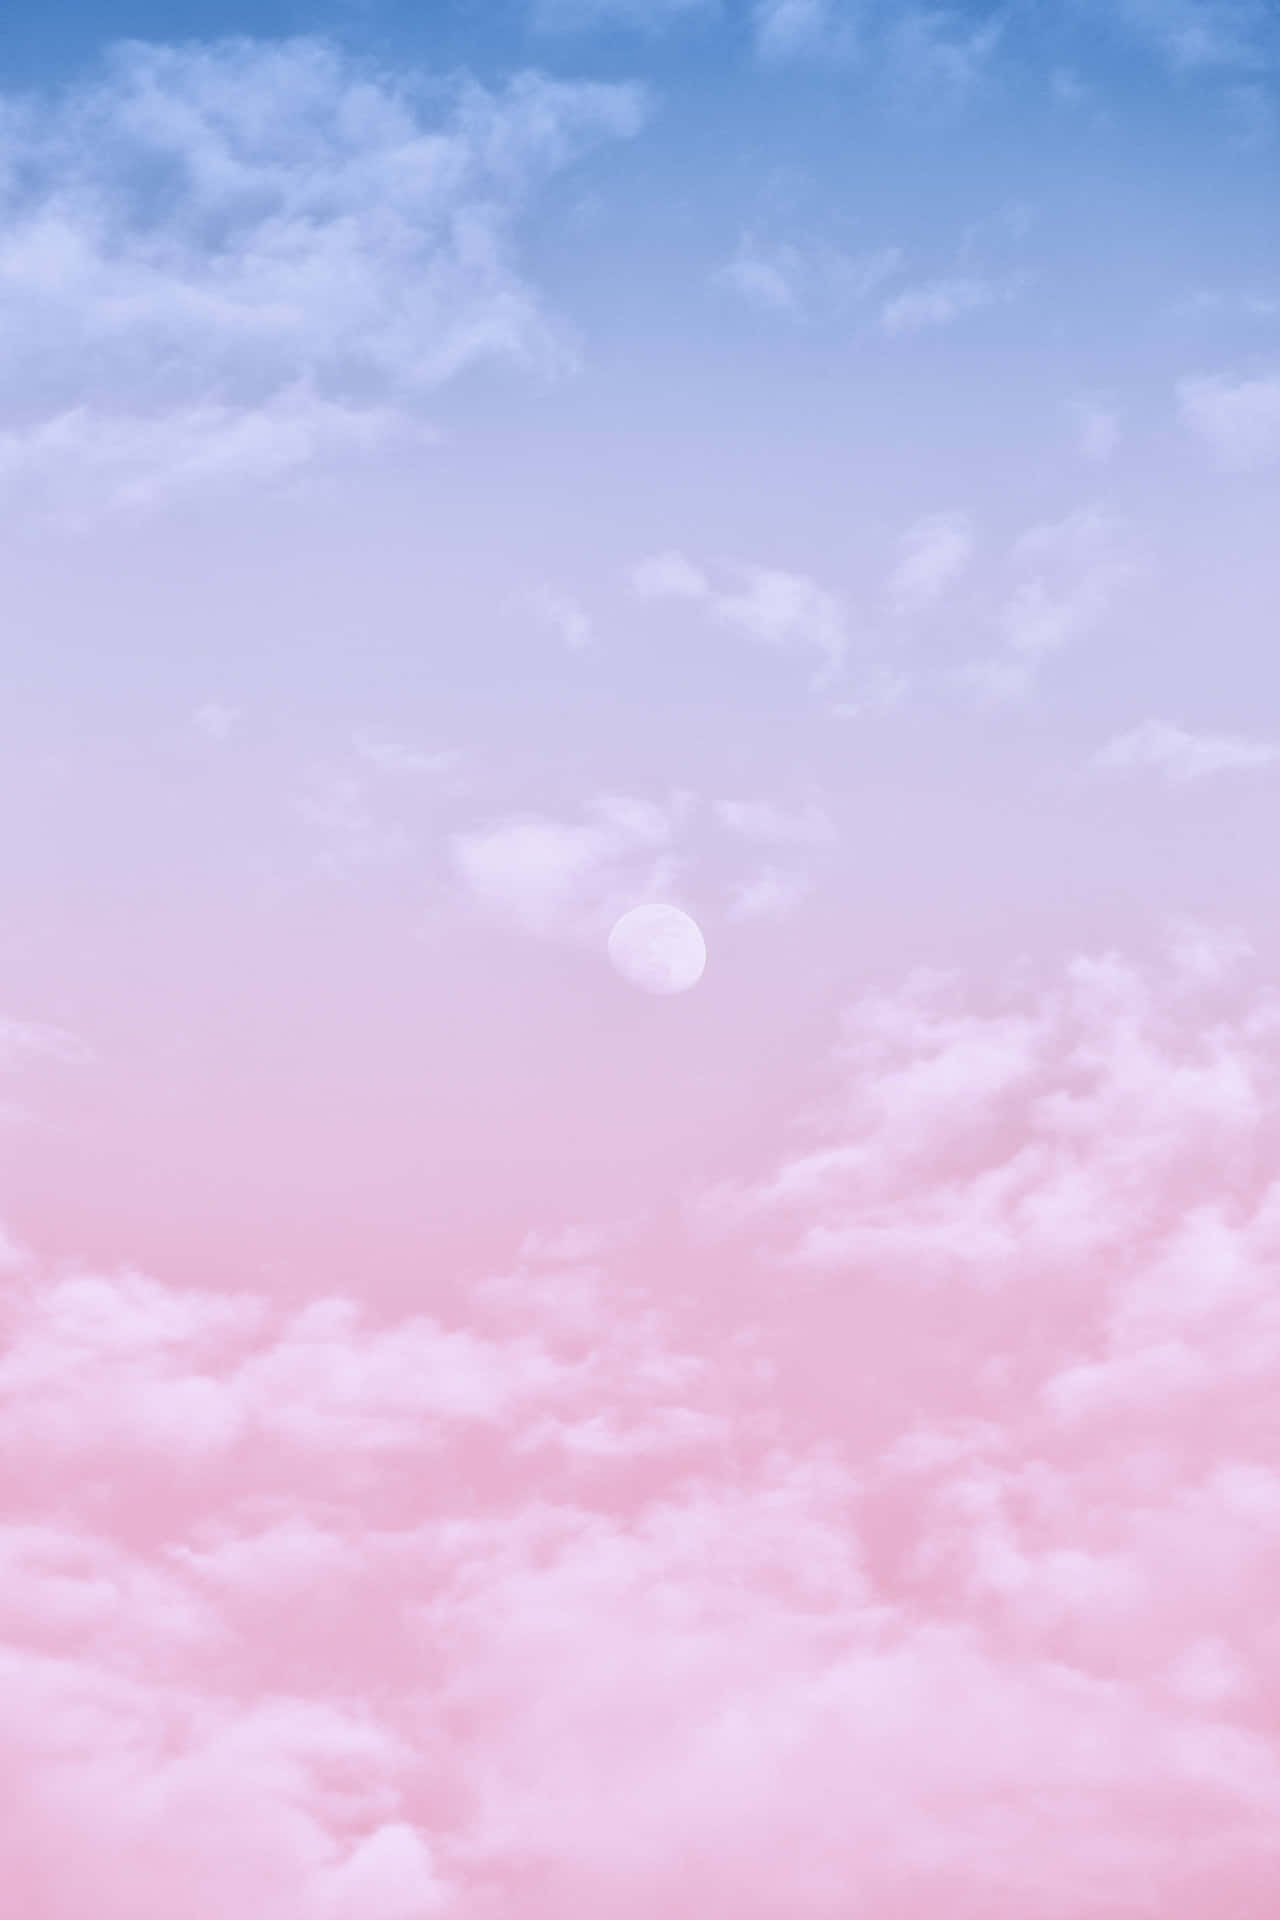 Unbel Cielo Al Tramonto Con Nuvole Rosa E Blu Sfondo